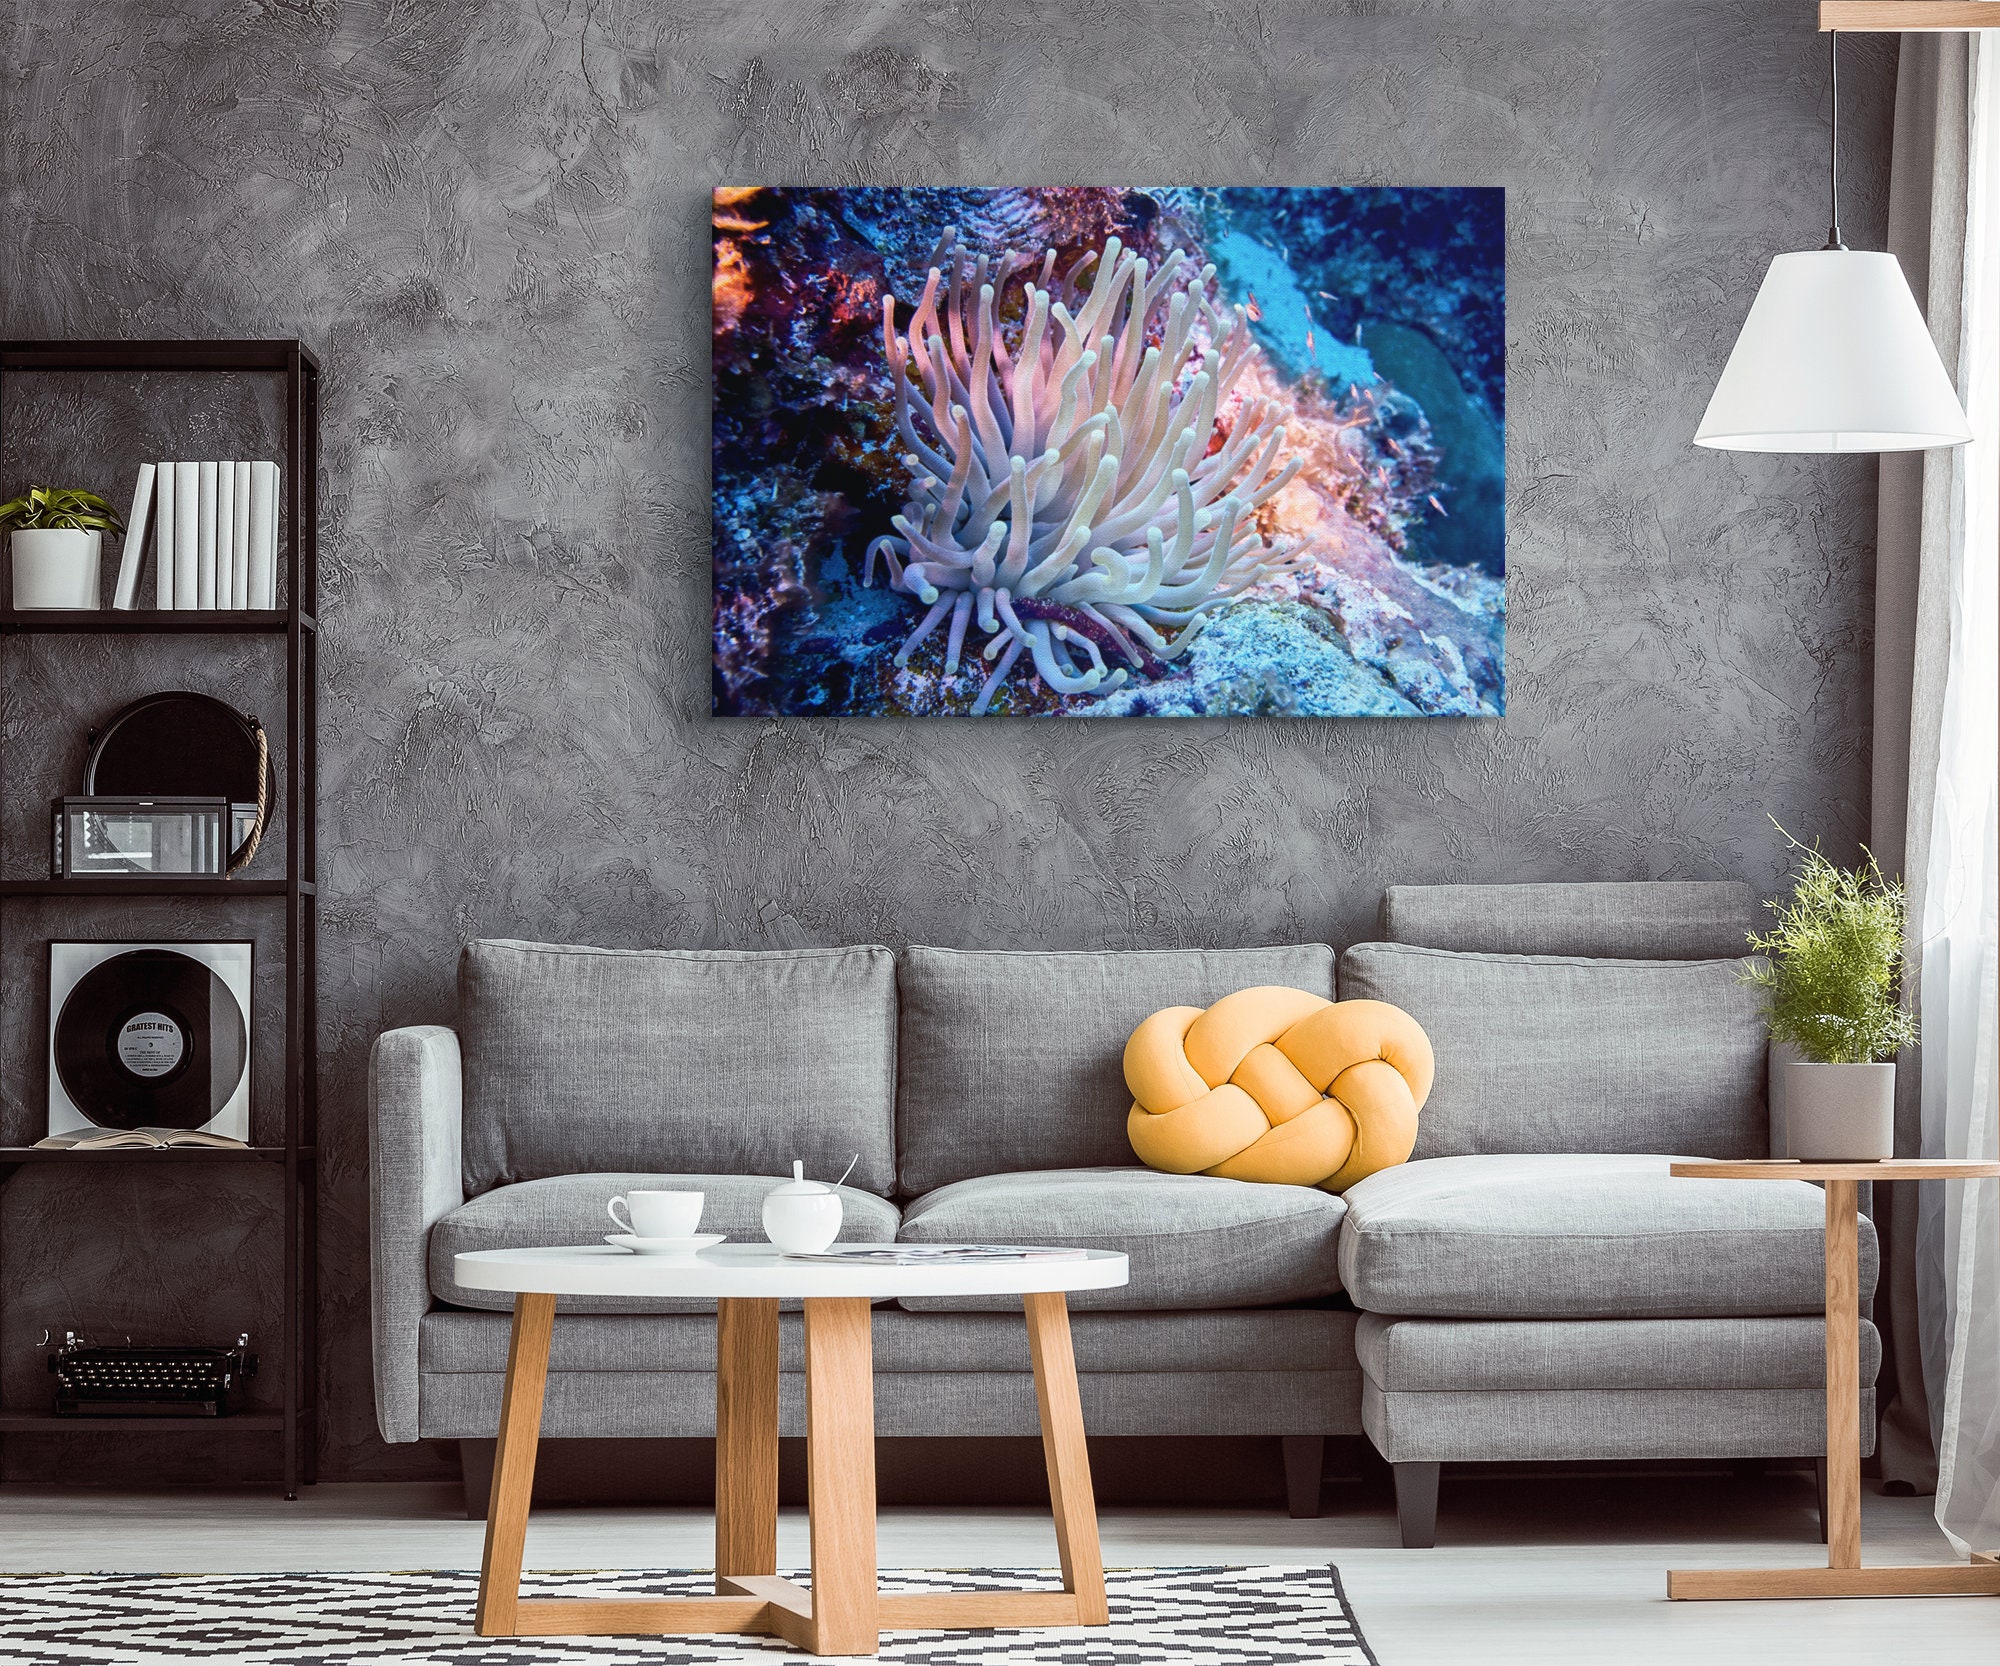 Giant Anemone Underwater Photo Canvas Wrap Art Print 5 Sizes - Etsy